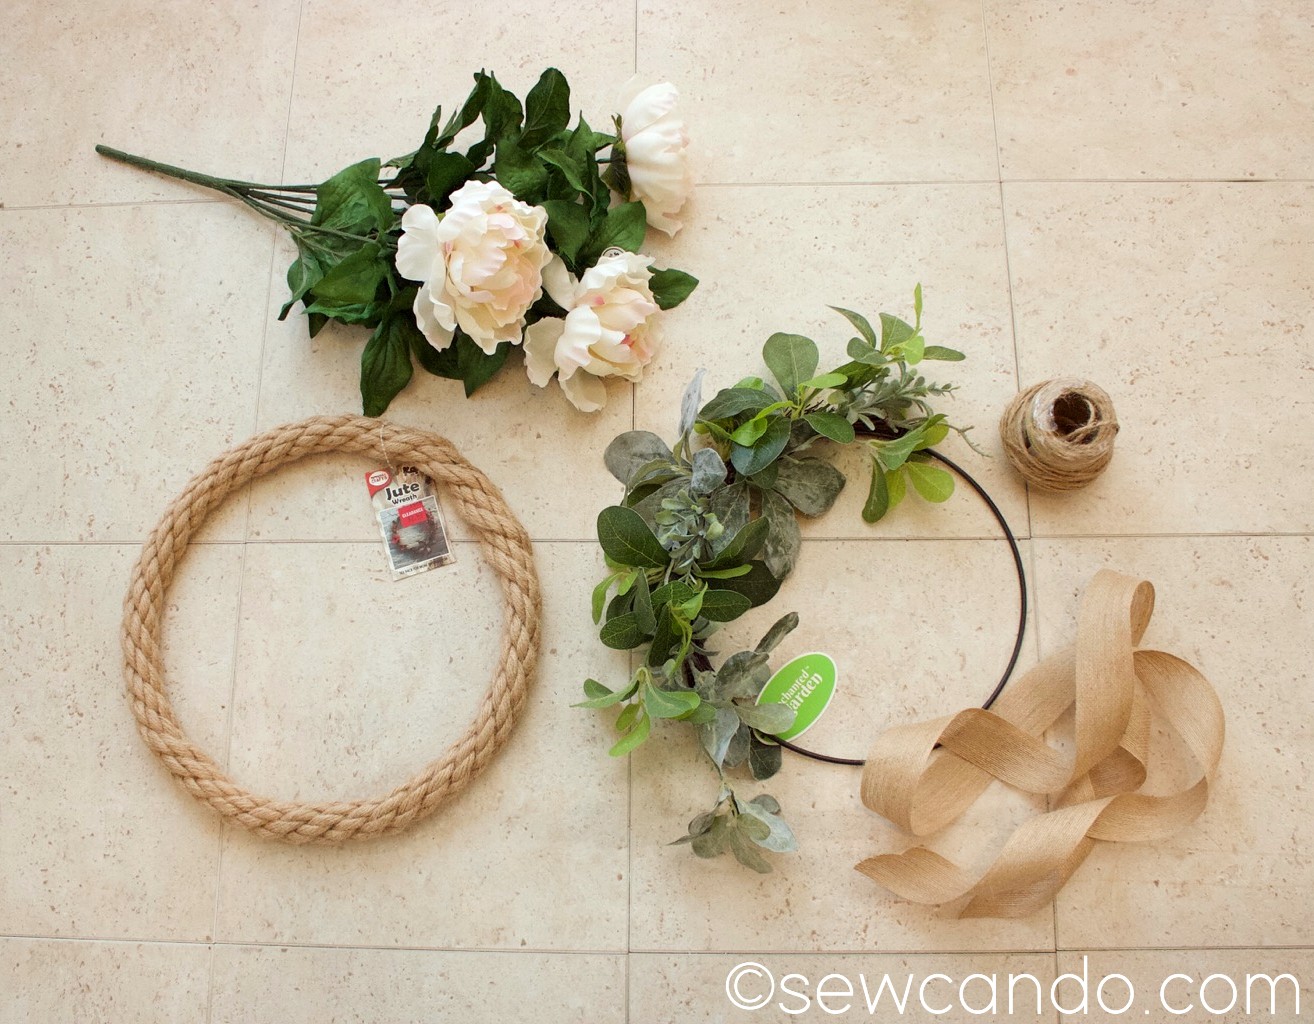 Sew Can Do: Easy DIY Rope & Greenery Wreath